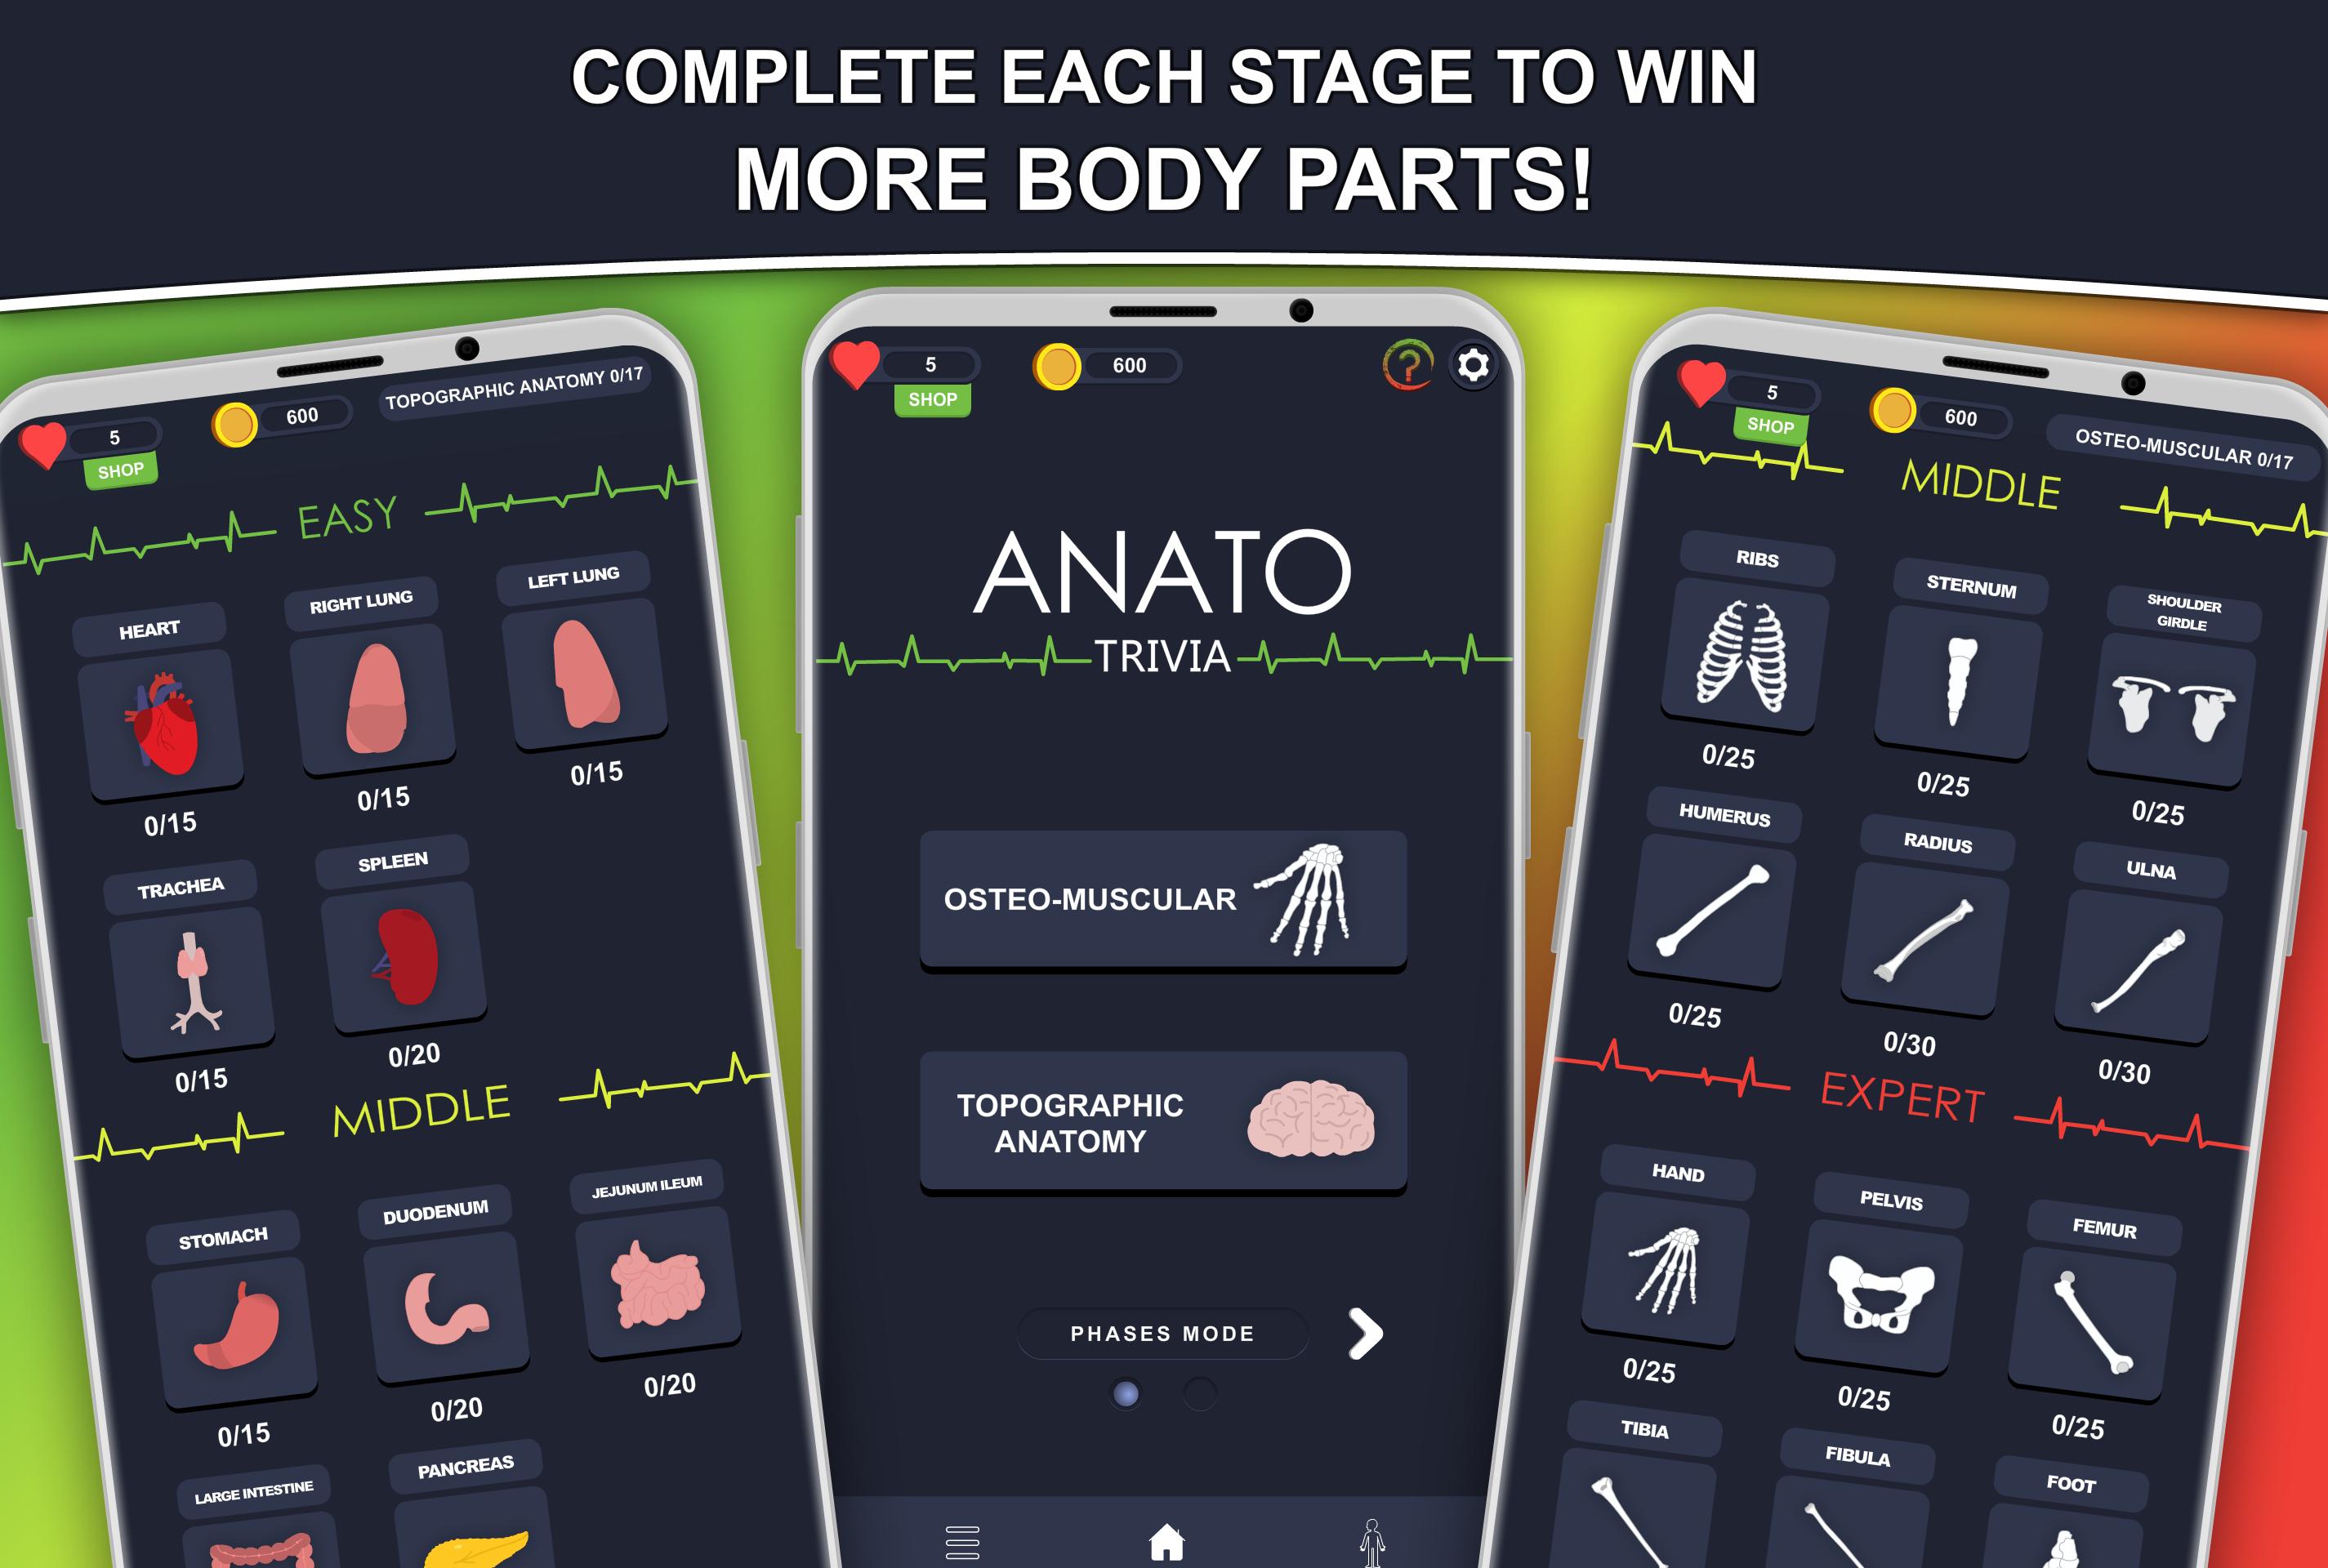 Anato Trivia Quiz on Human Anatomy 3.1.0 Screenshot 3